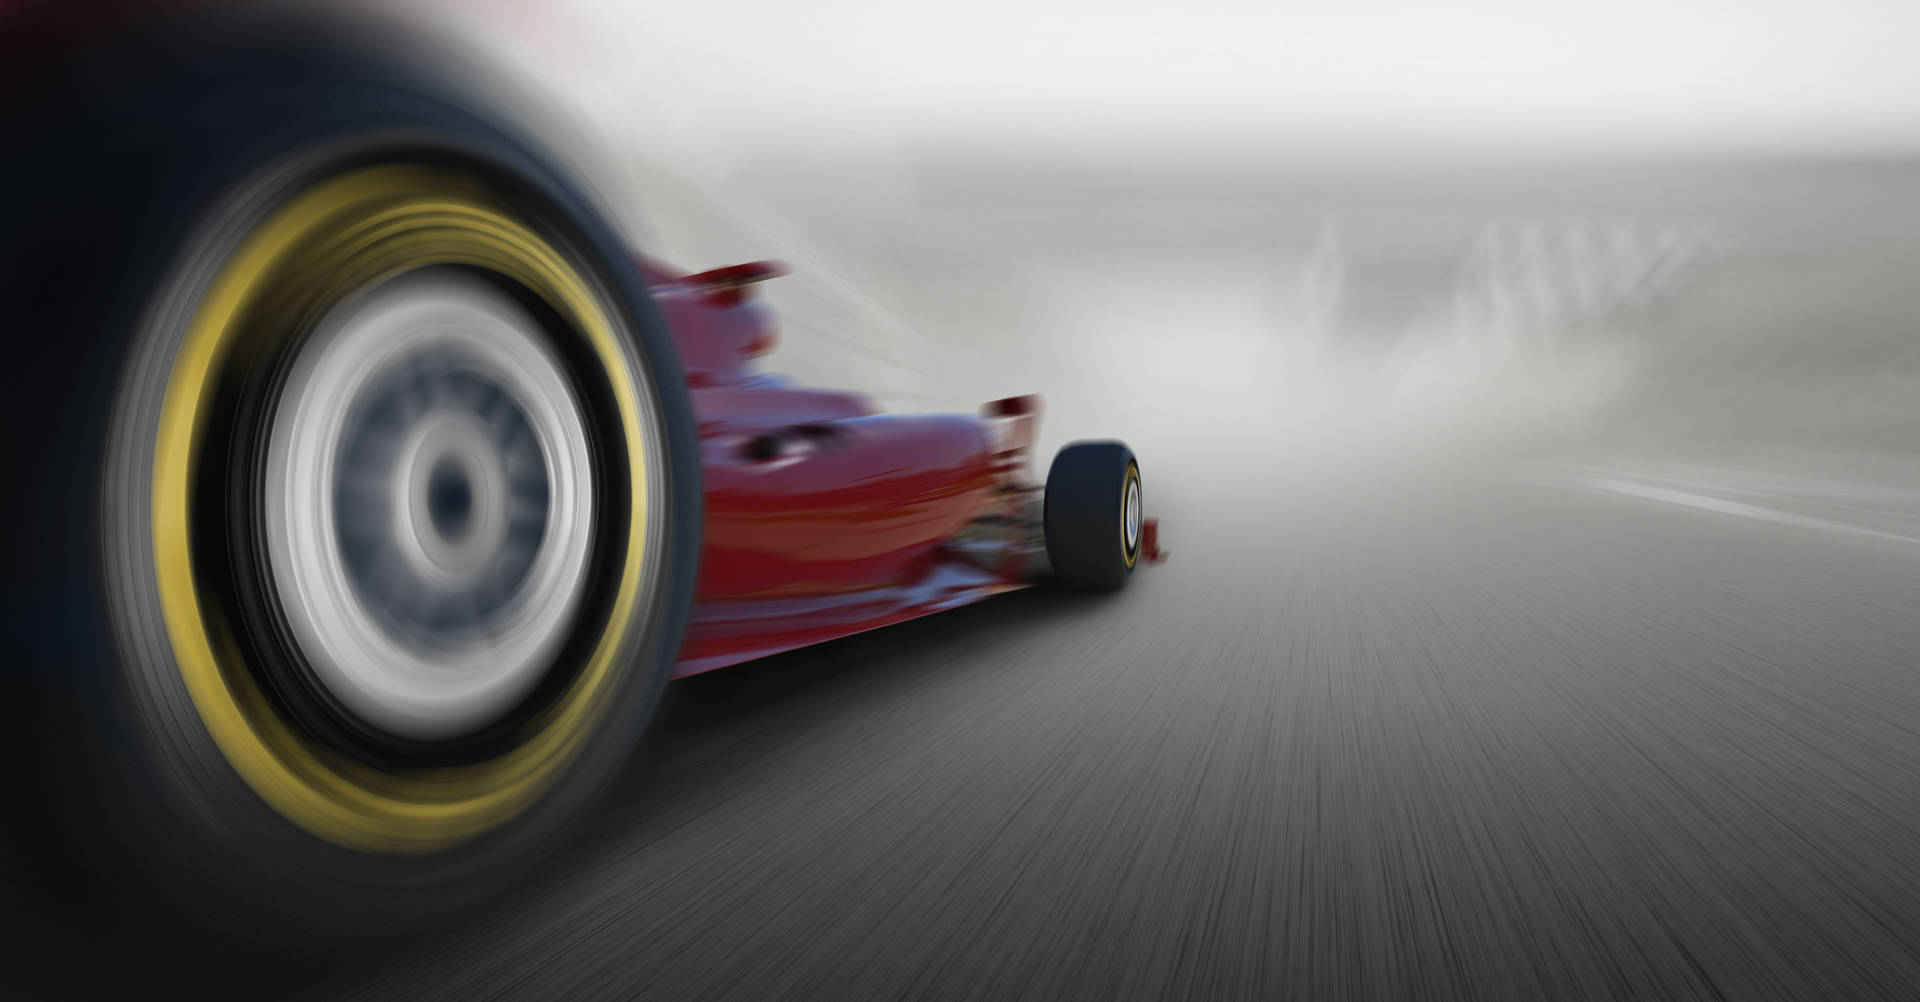 F1 High Speed Racing